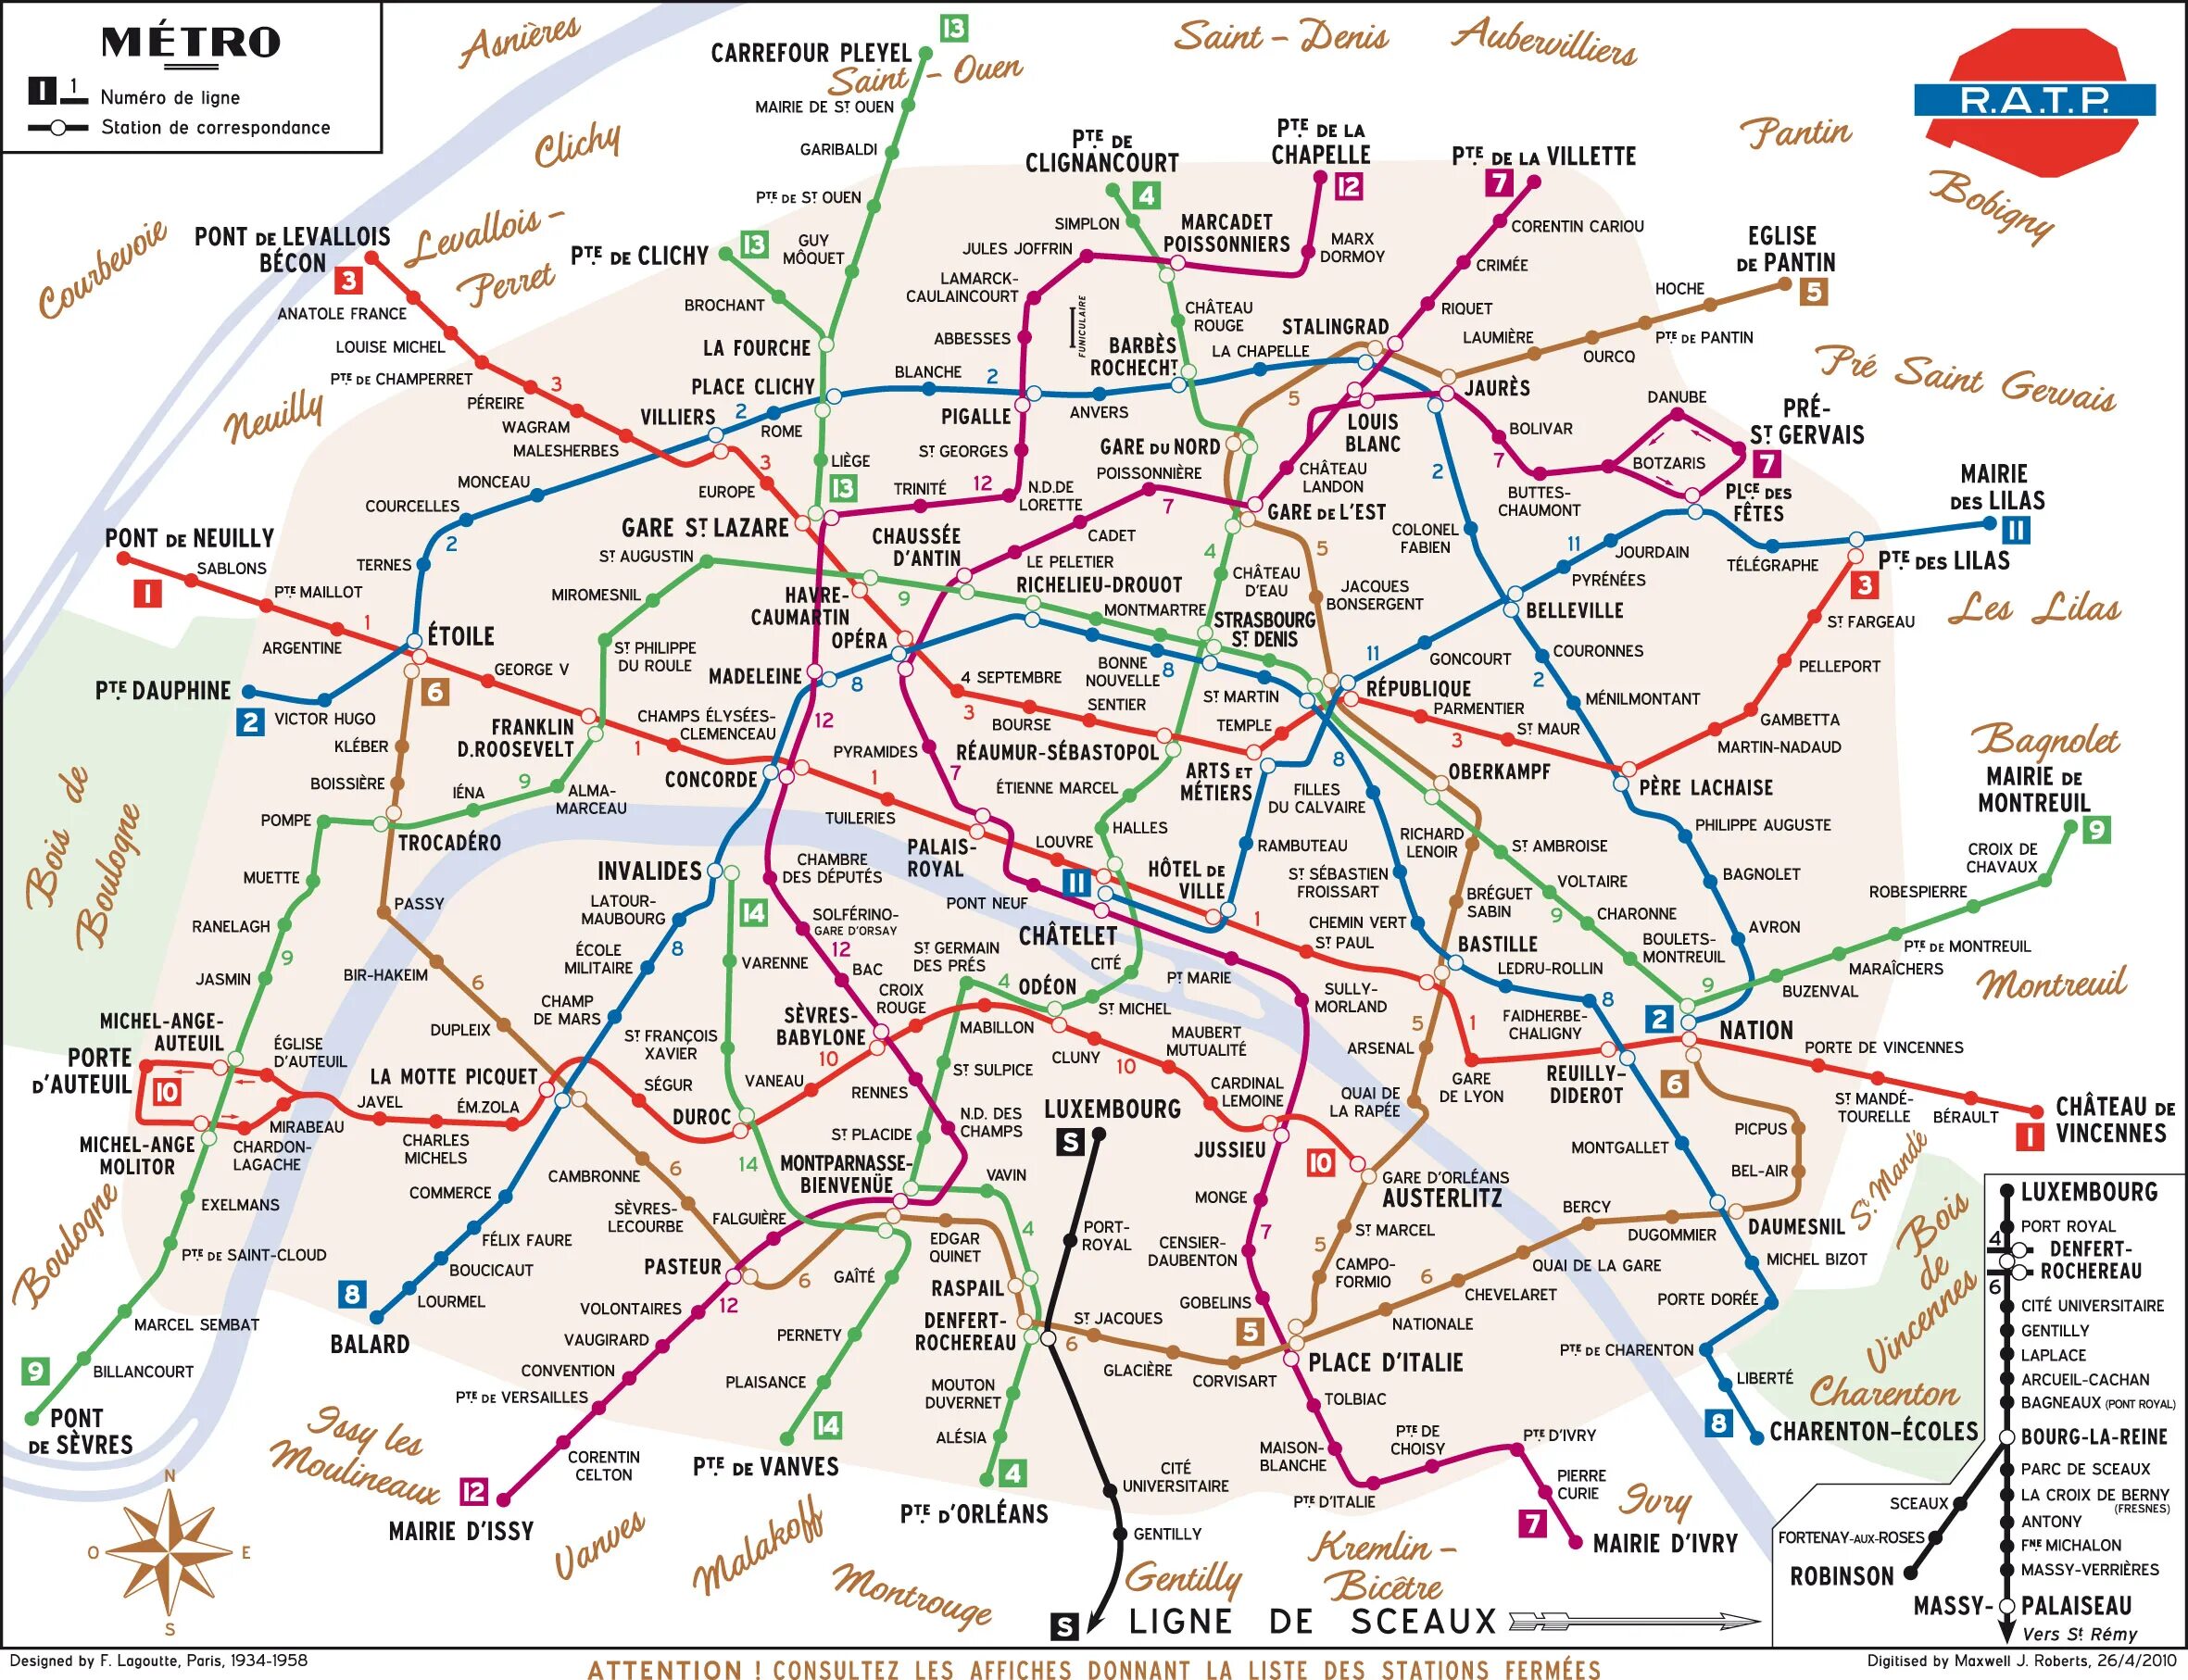 Сколько метро париж. Метро Парижа схема. Карта метро Парижа 2022. Схема метро Парижа 2021. Схема метро Парижа 2022.